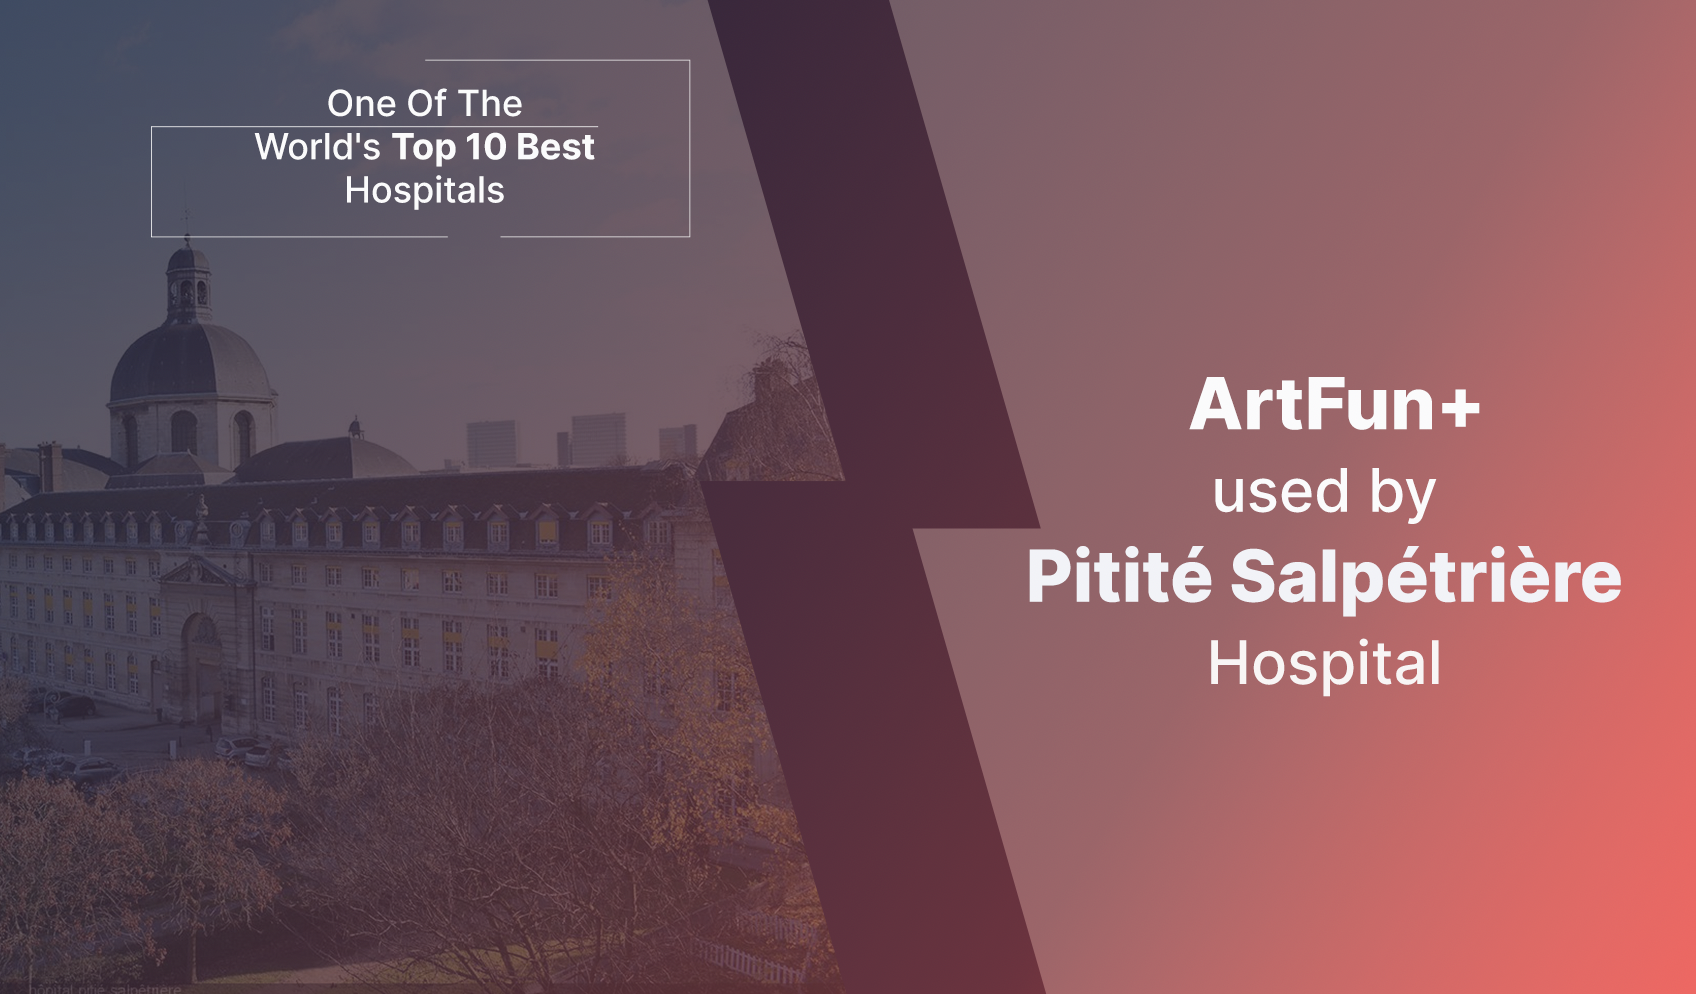 Artfun+ is used by Pitité Salpétrière Hospital